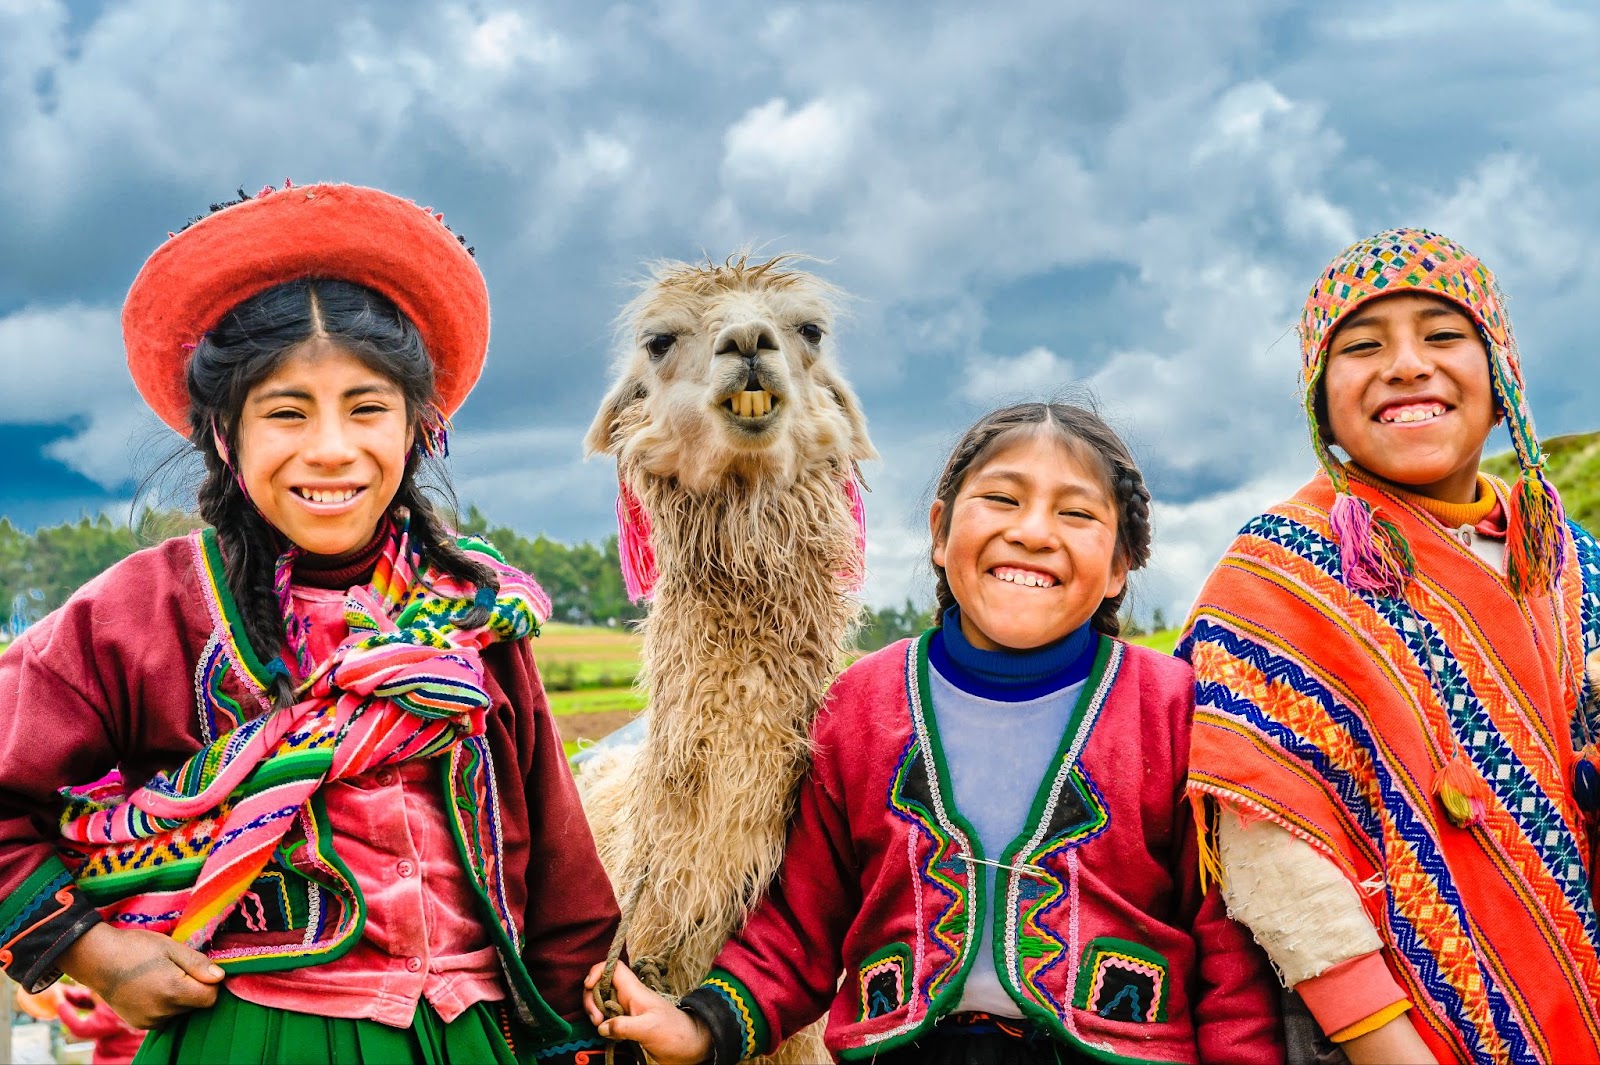 People In Peru